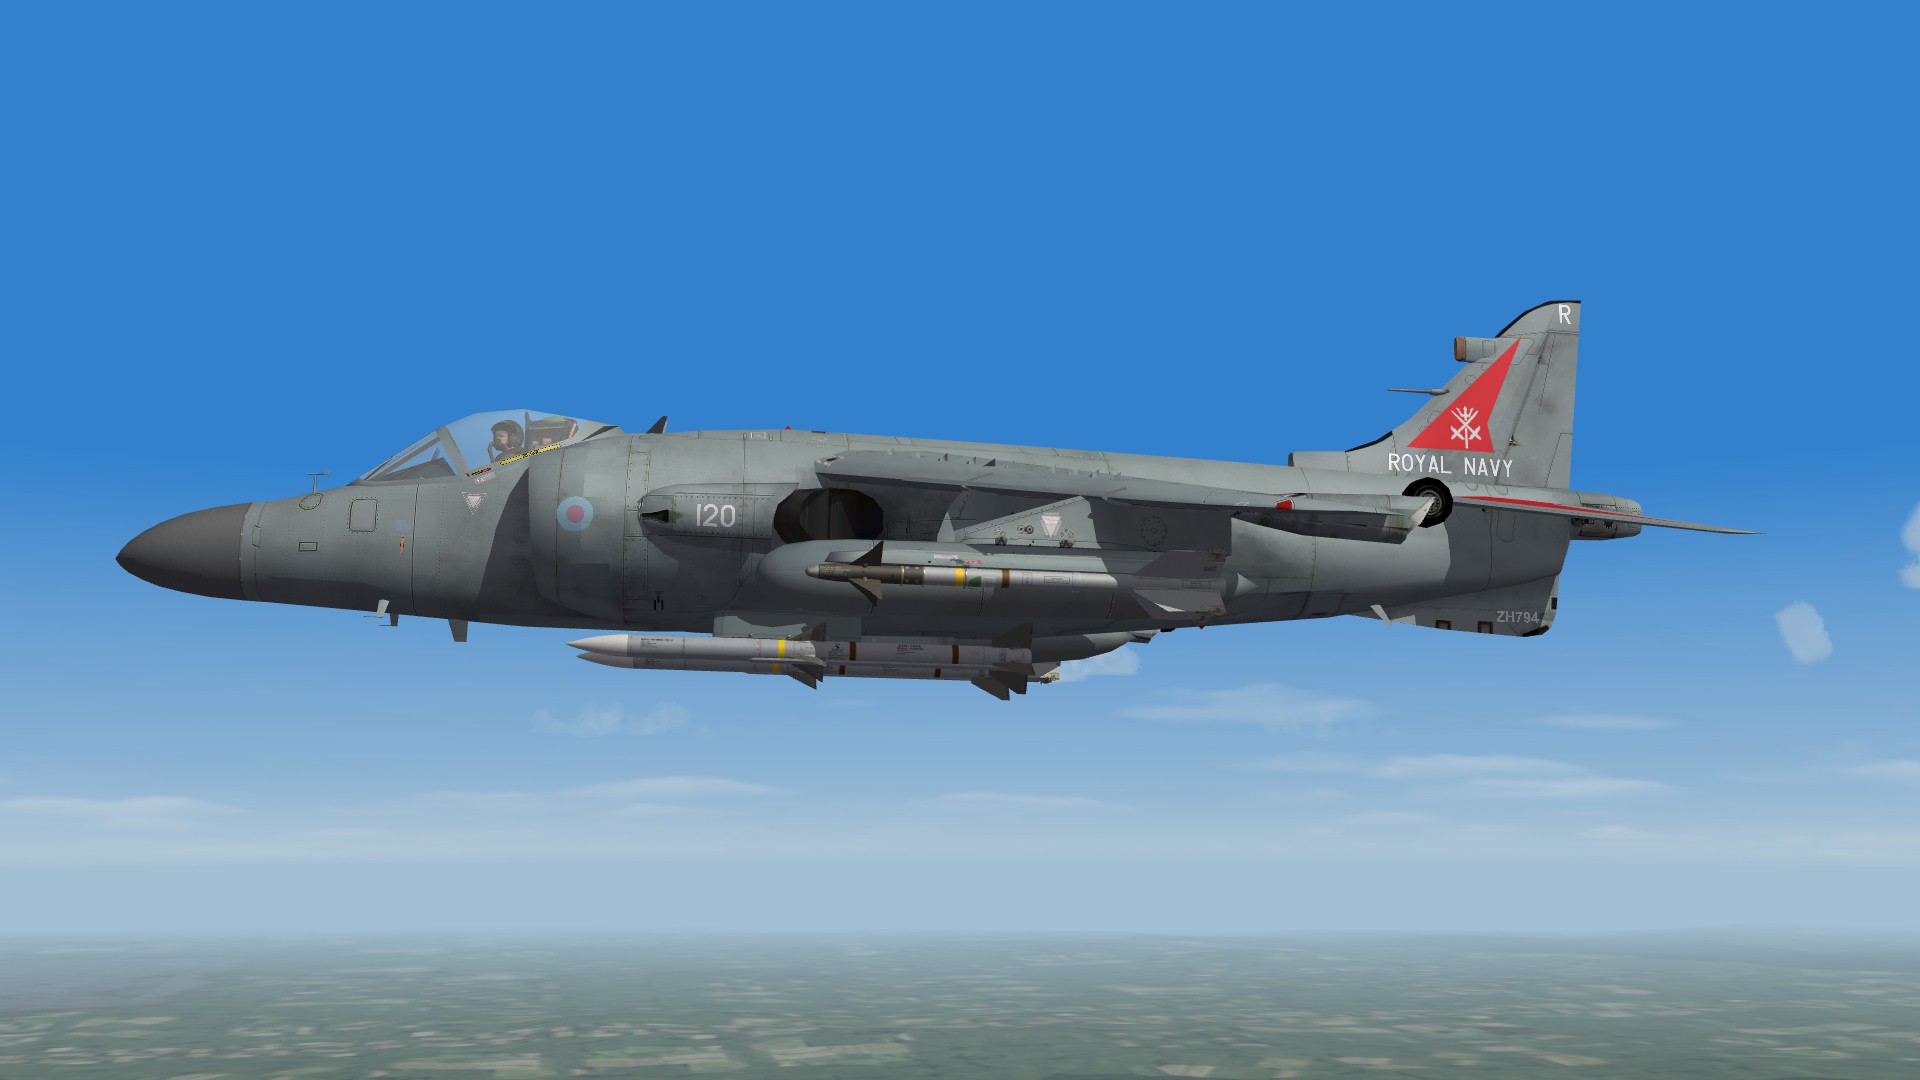 Sea Harrier FRS.2 AMRAAM station update/ correction